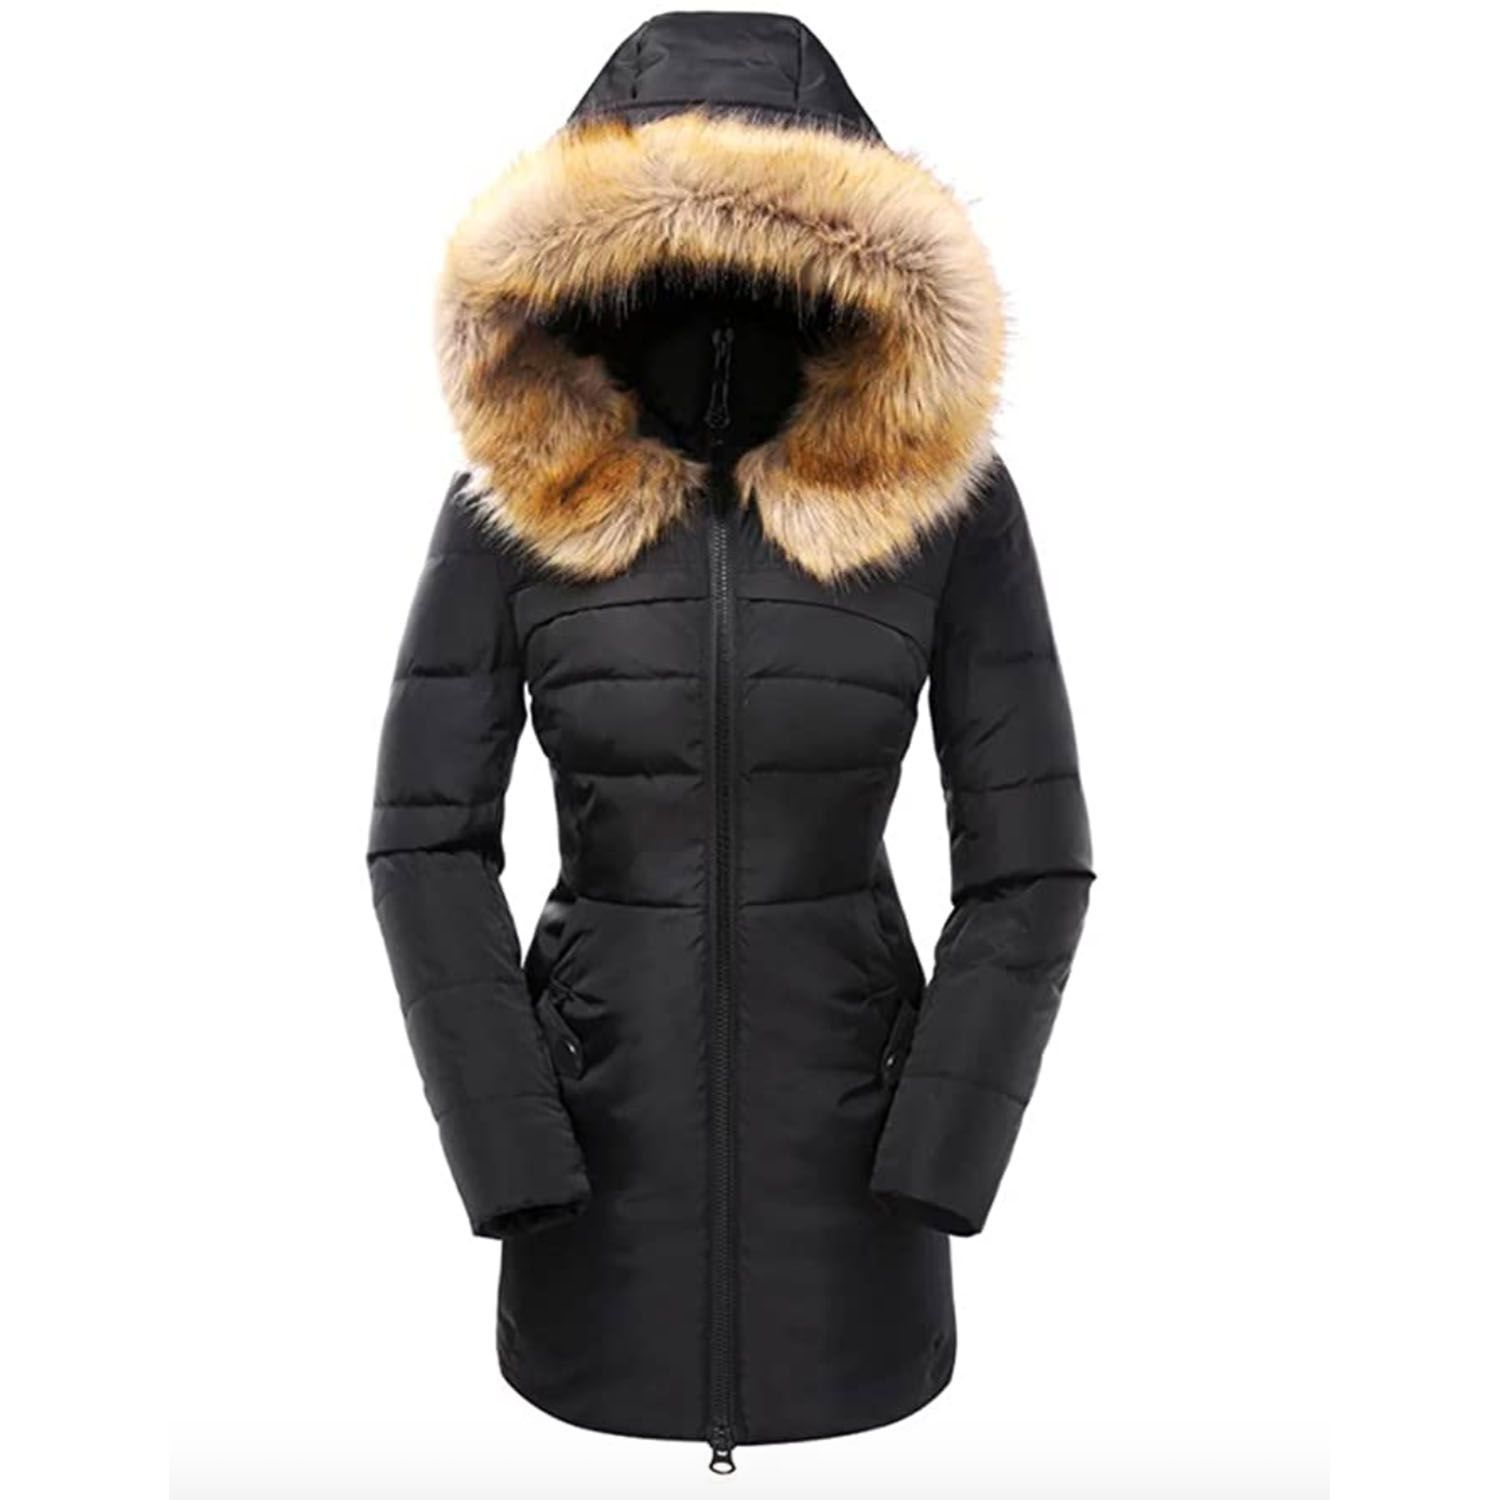 FTCayanz Girls Winter Down Jacket Parka Coats Long Jackets with Fur Hood 